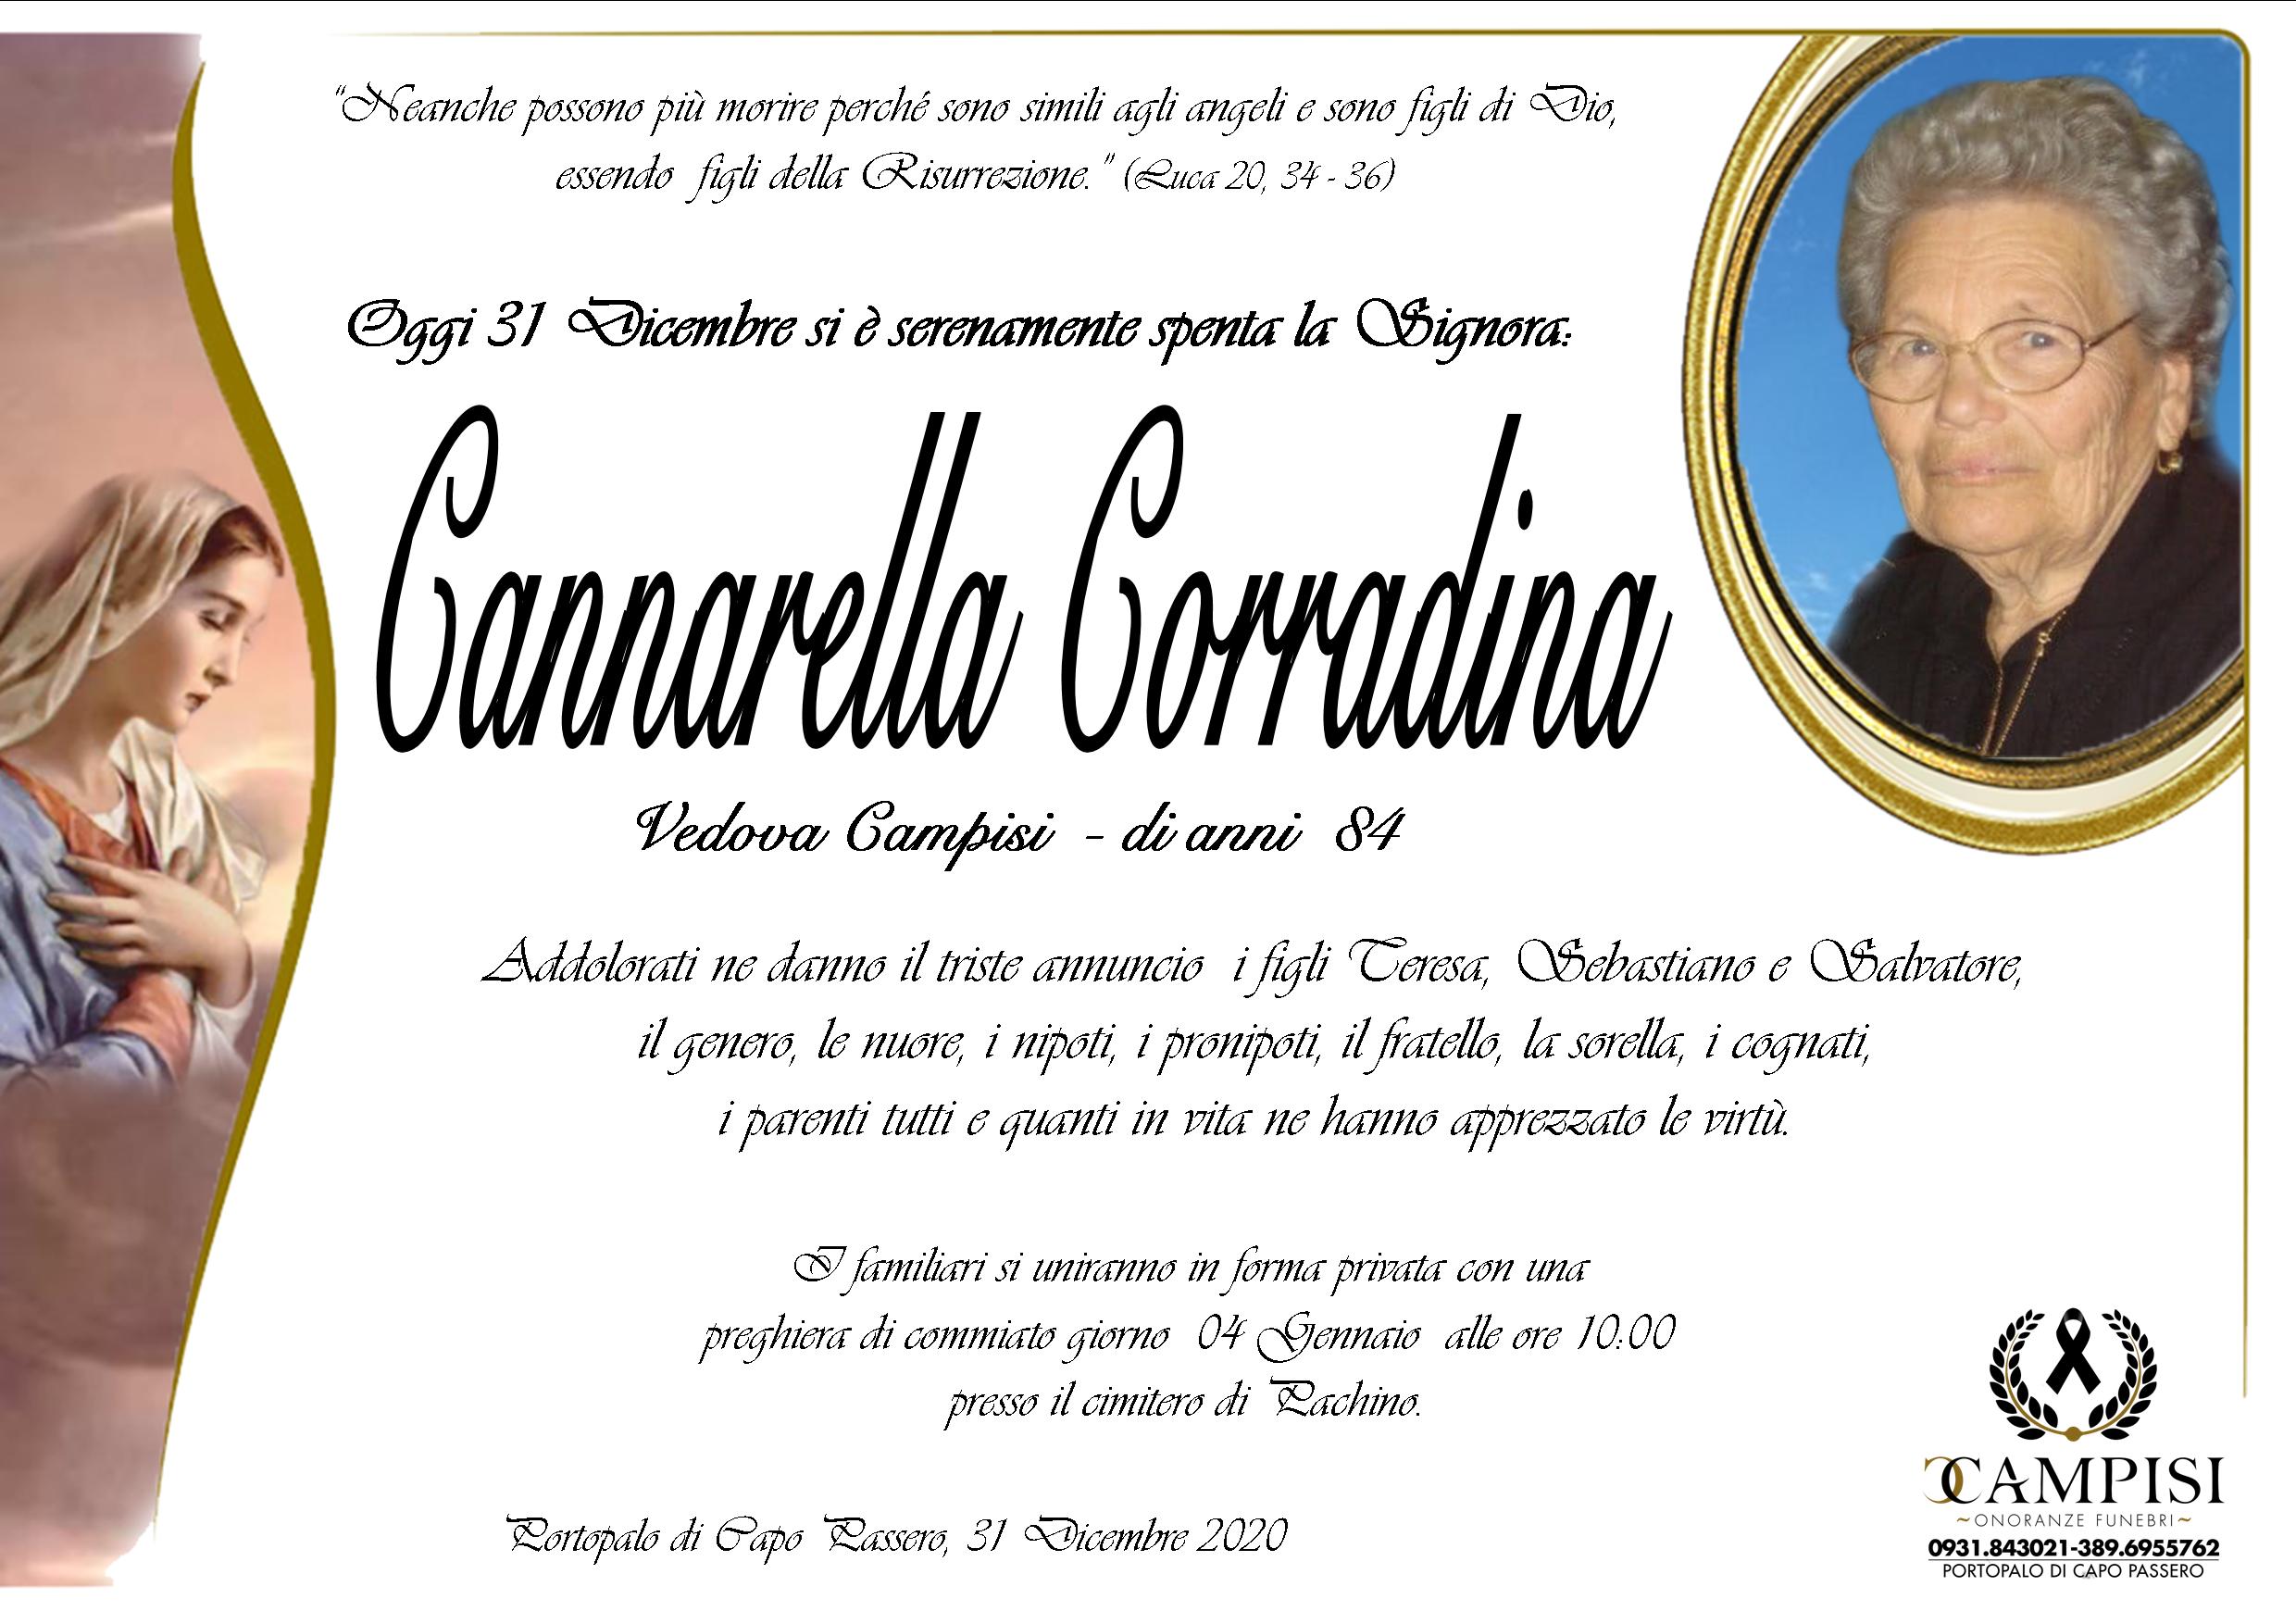 Cannarella Corradina